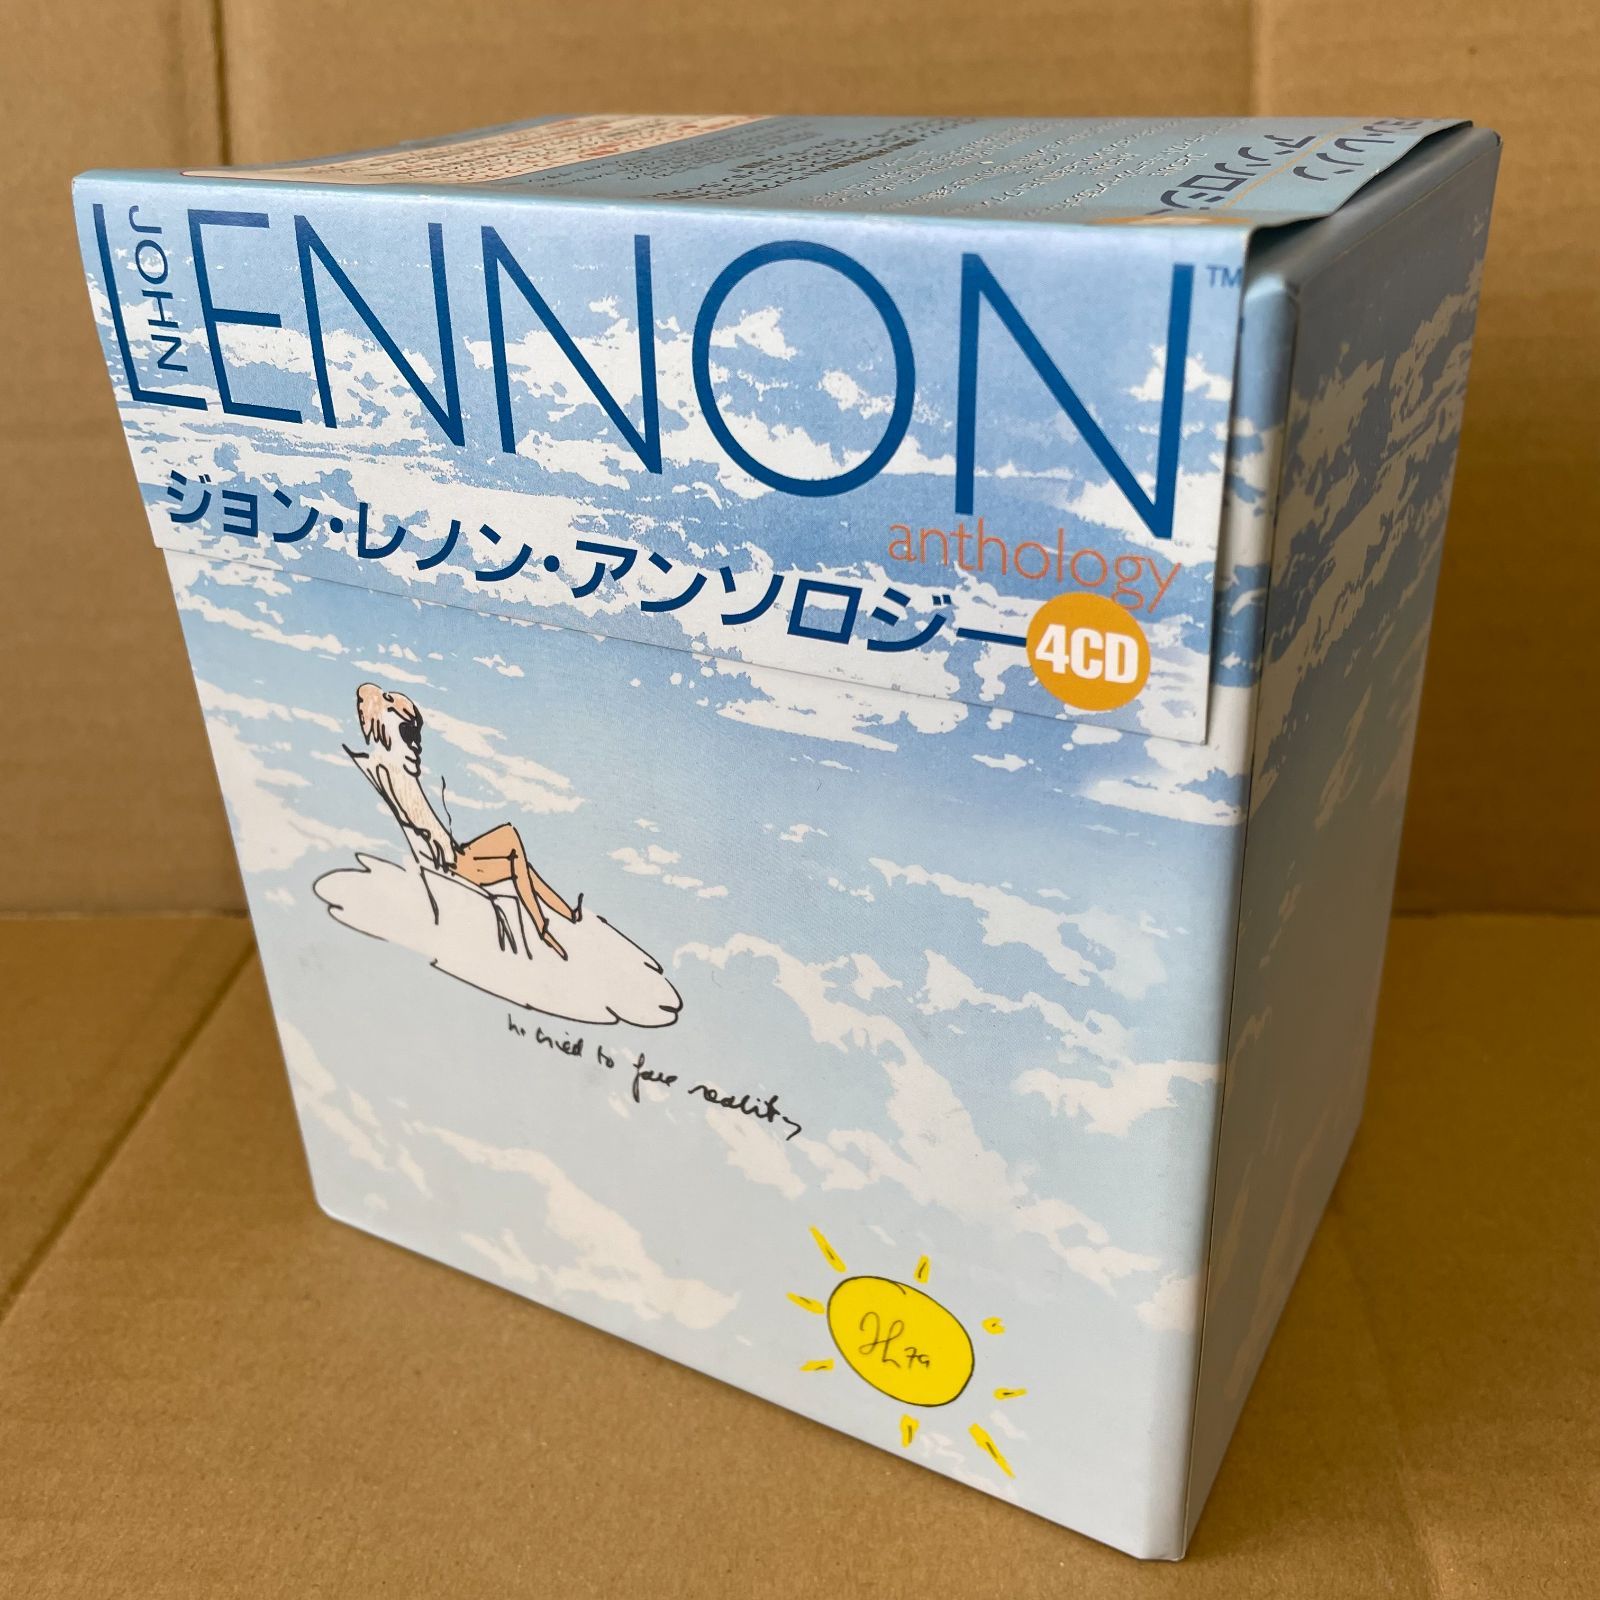 4CD BOX ジョン・レノン アンソロジー JOHN LENNON 未発表集